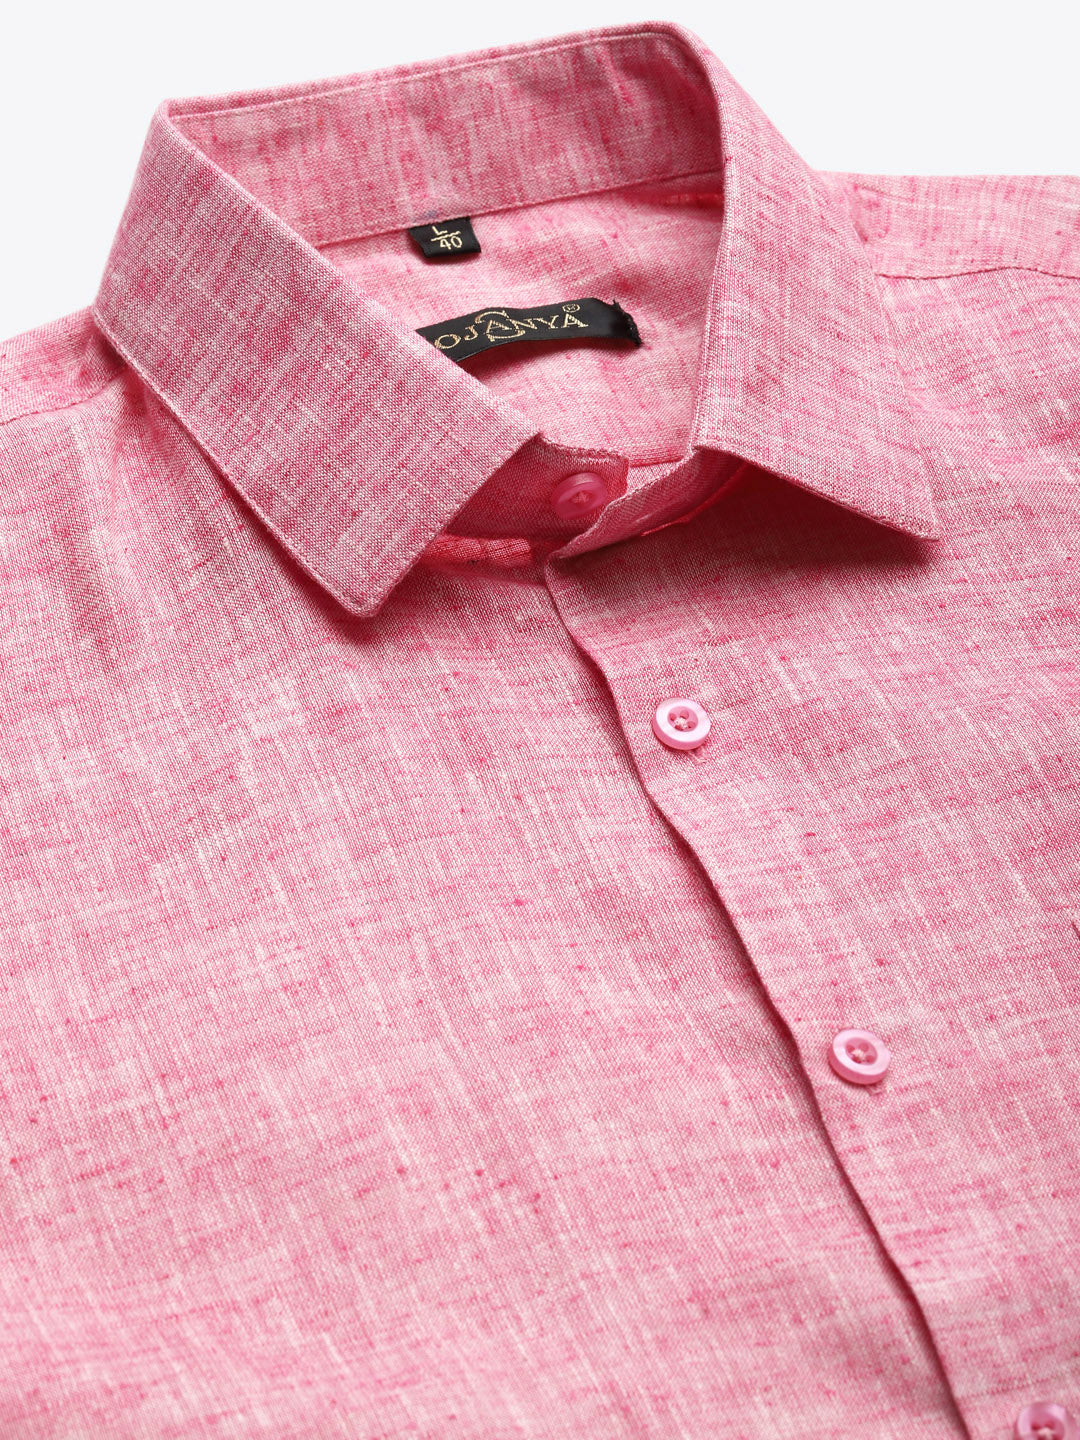 Men's Cotton Blend Pink Classic Formal Shirt - Sojanya